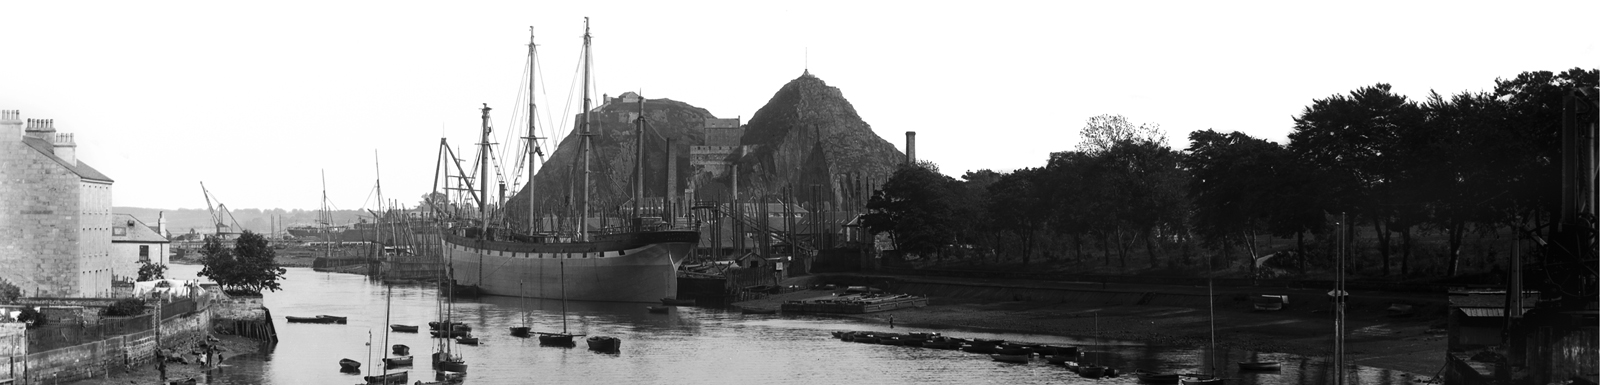 Denny Shipyard, image courtesy Aberdeen University/George Washington Wilson collection